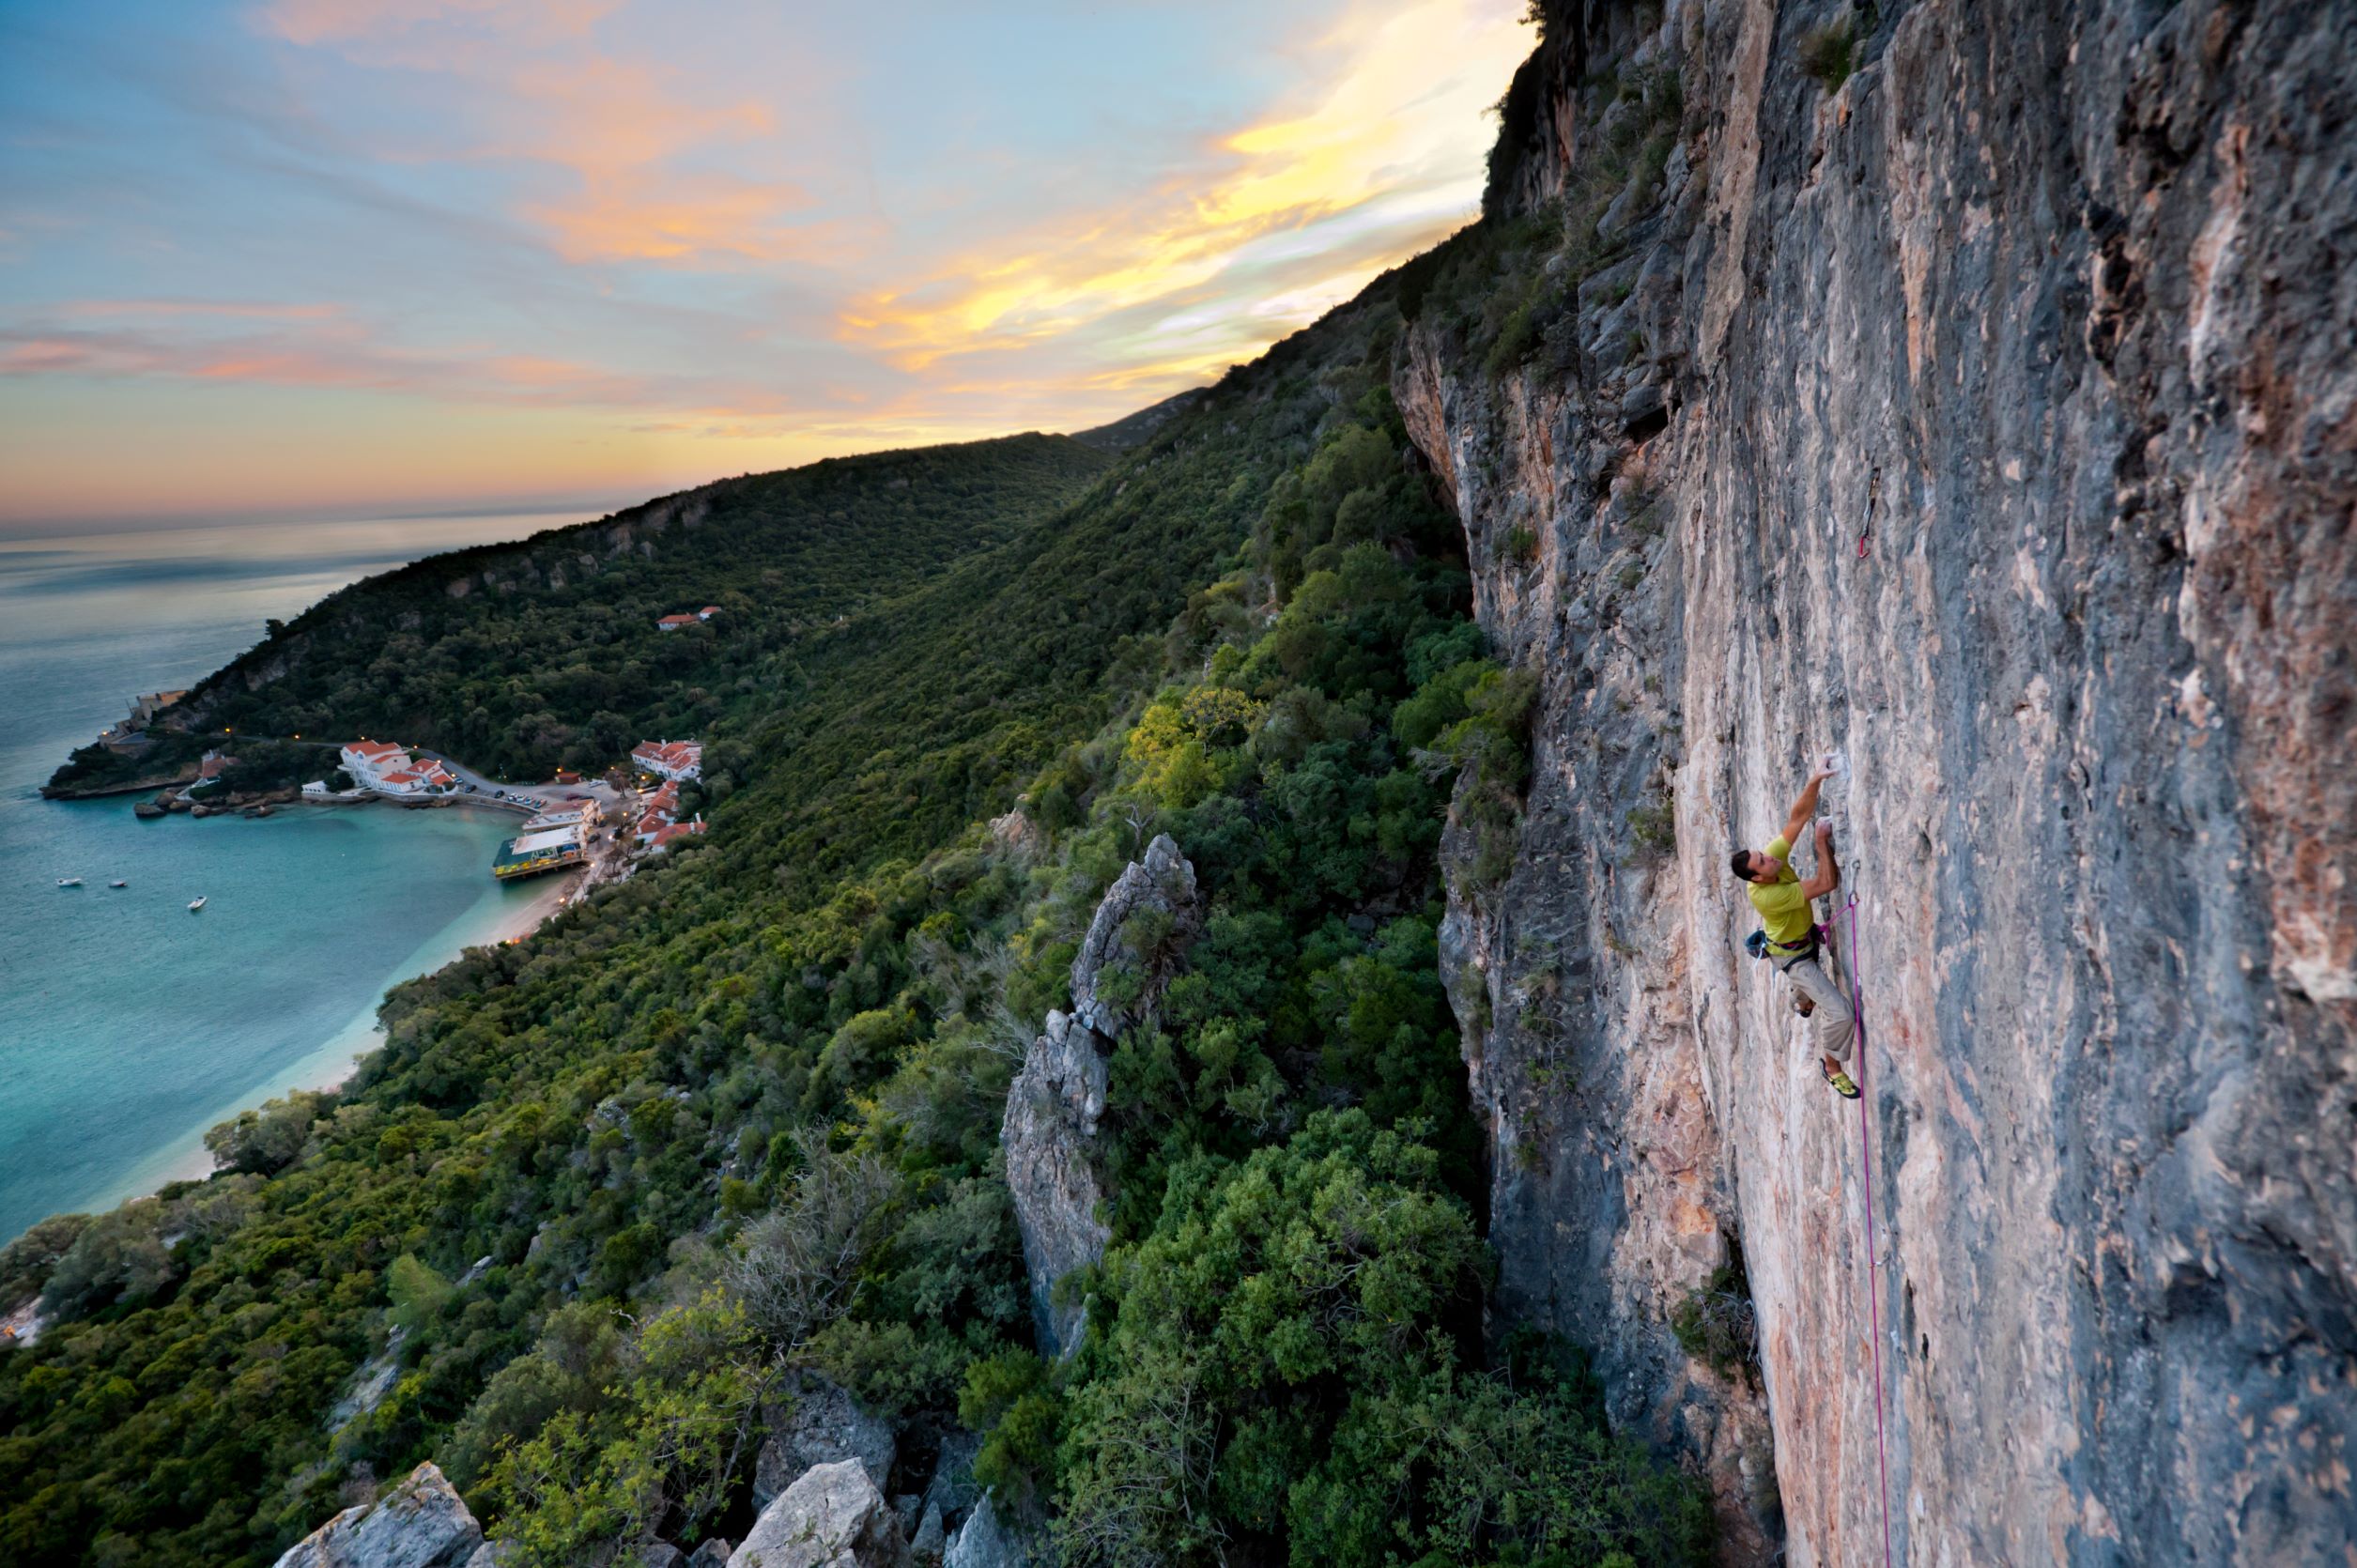 A climber on a limestone cliff near Lisbon, Portugal